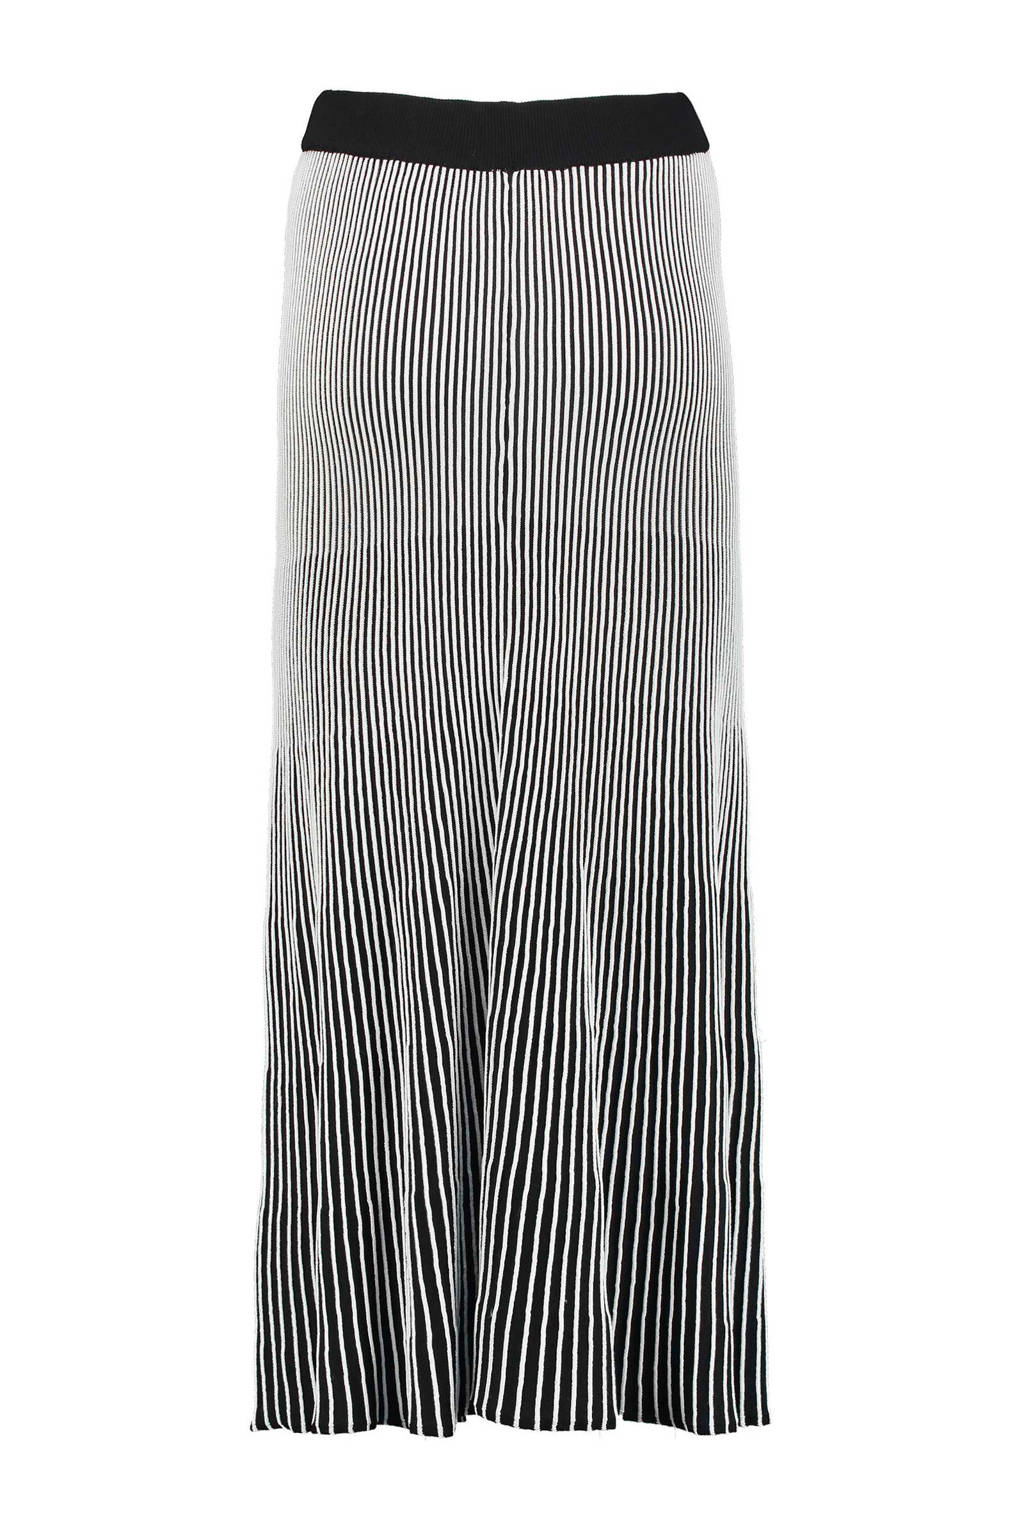 Hol mengsel Bijdrage Expresso gestreepte plissé rok zwart/wit | wehkamp